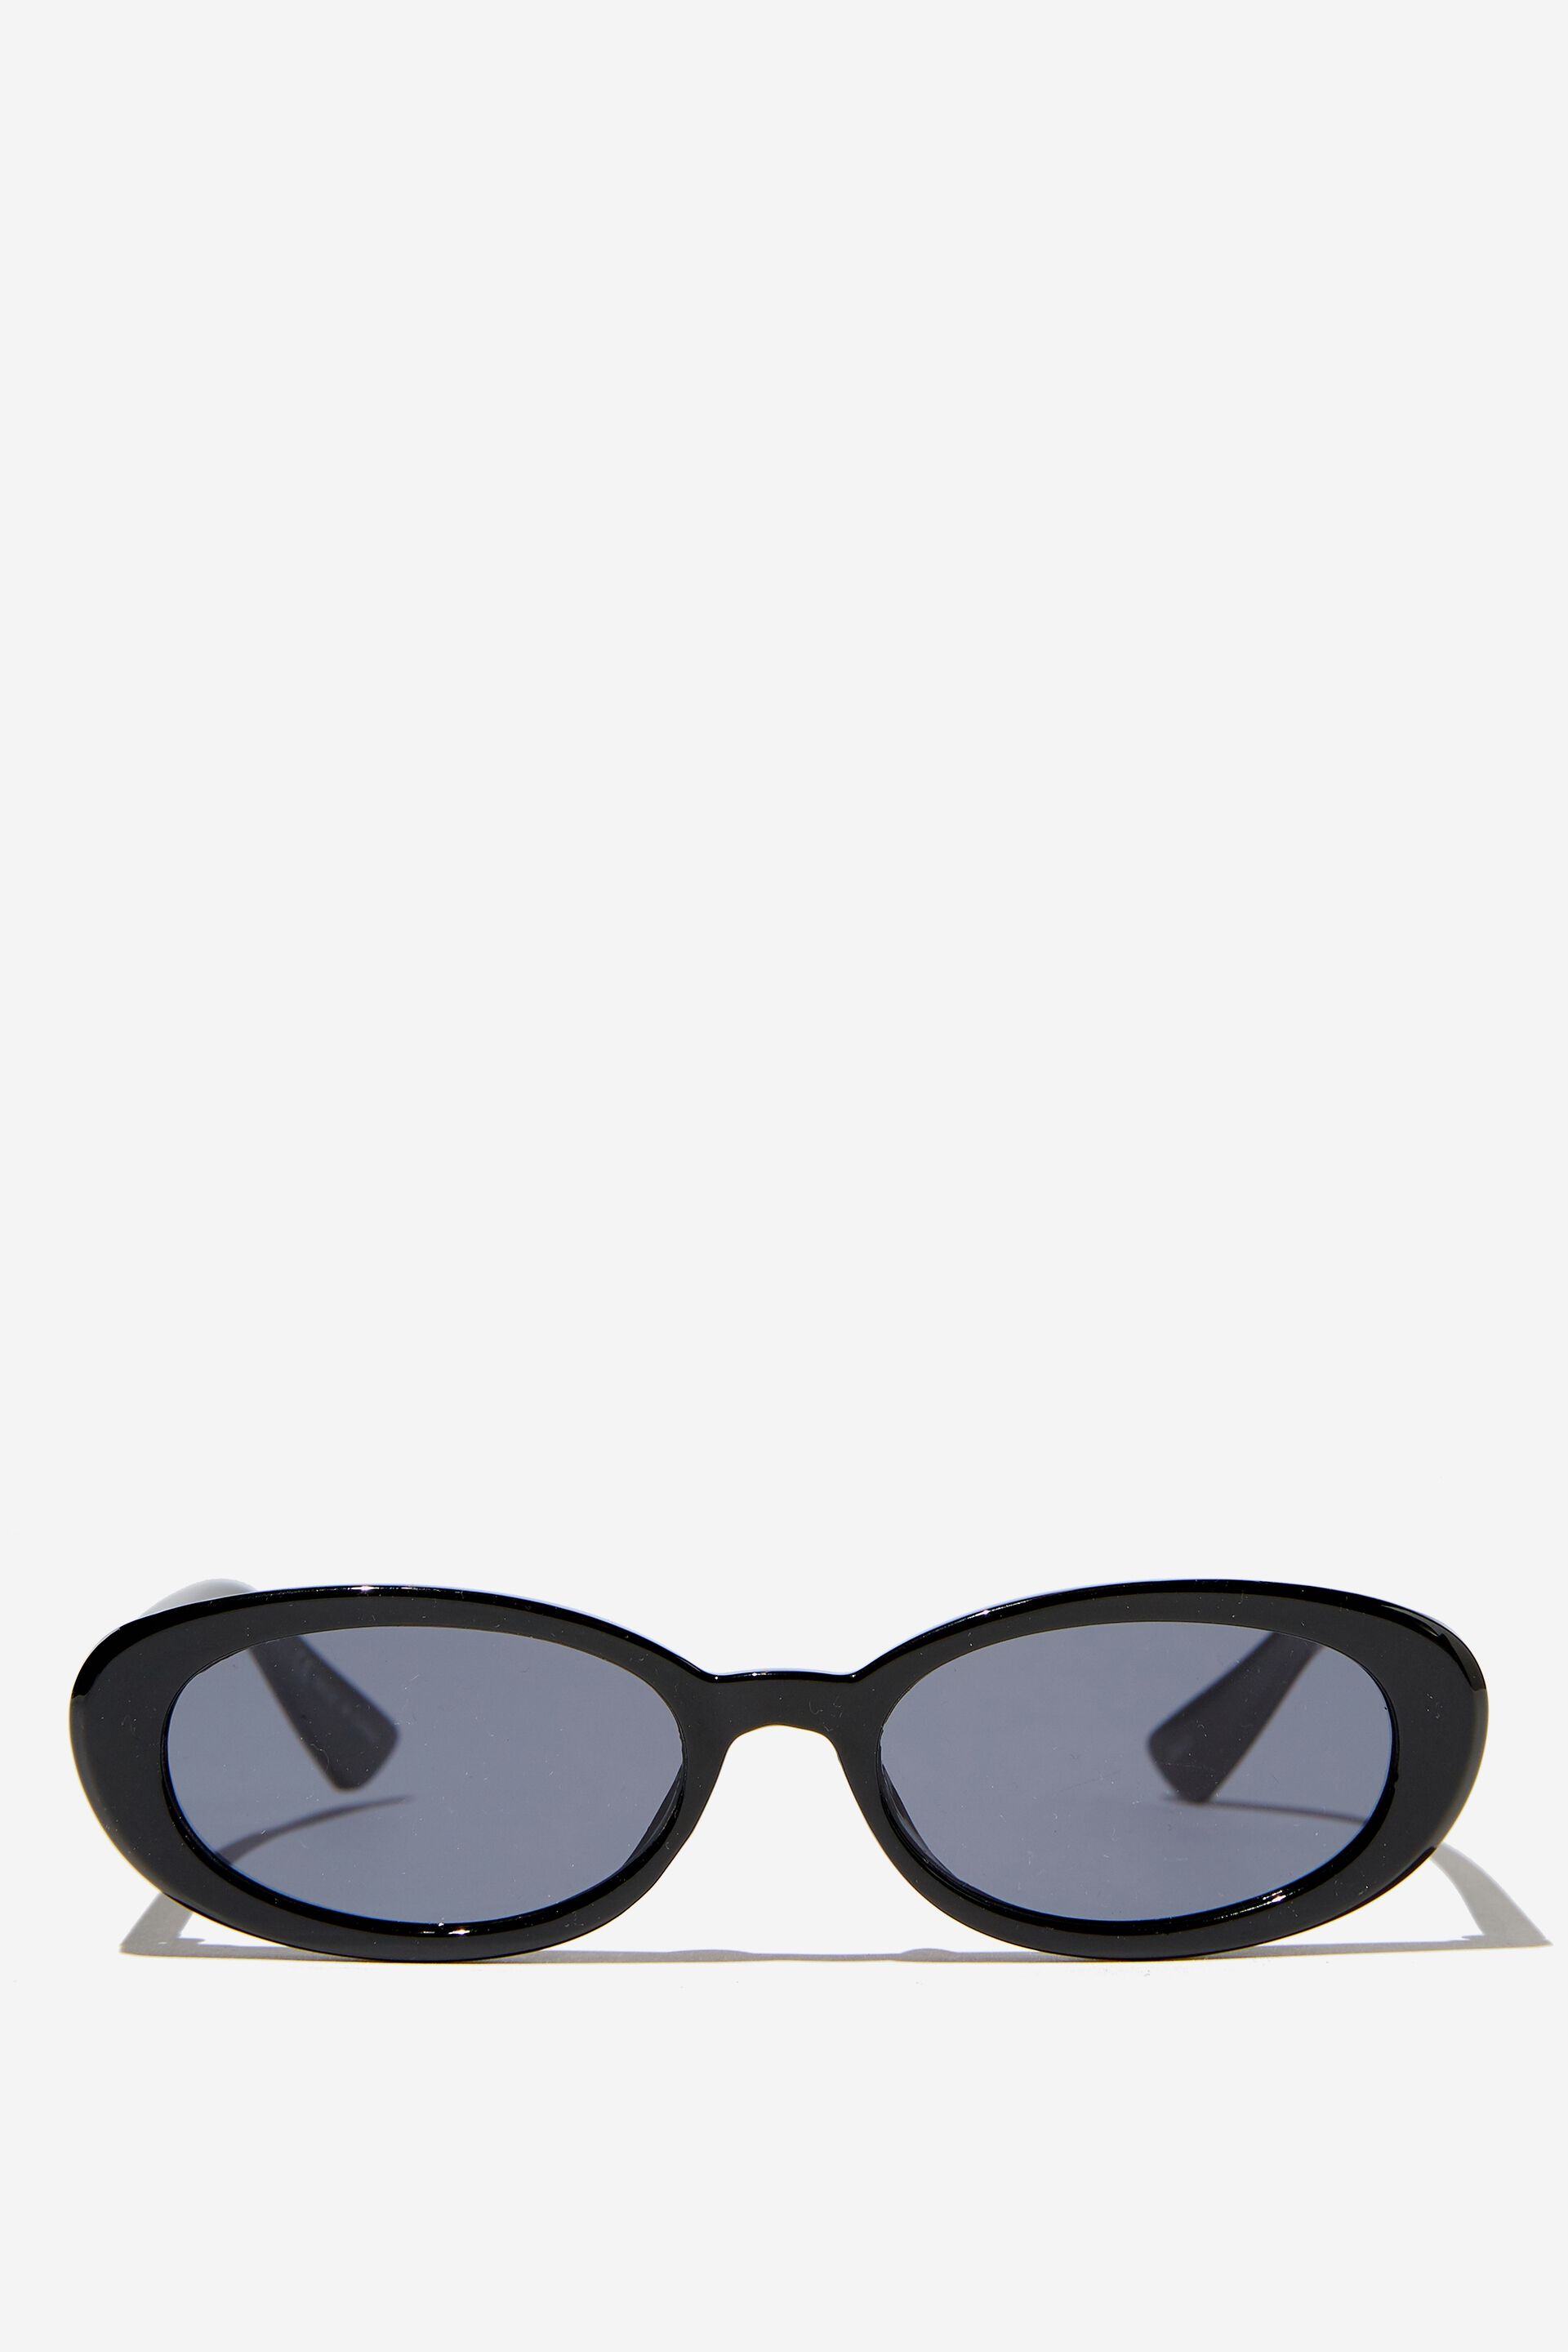 Taraneh x Corlin Eyewear Oval Sunglasses black-lilac casual look Accessories Sunglasses Oval Sunglasses 